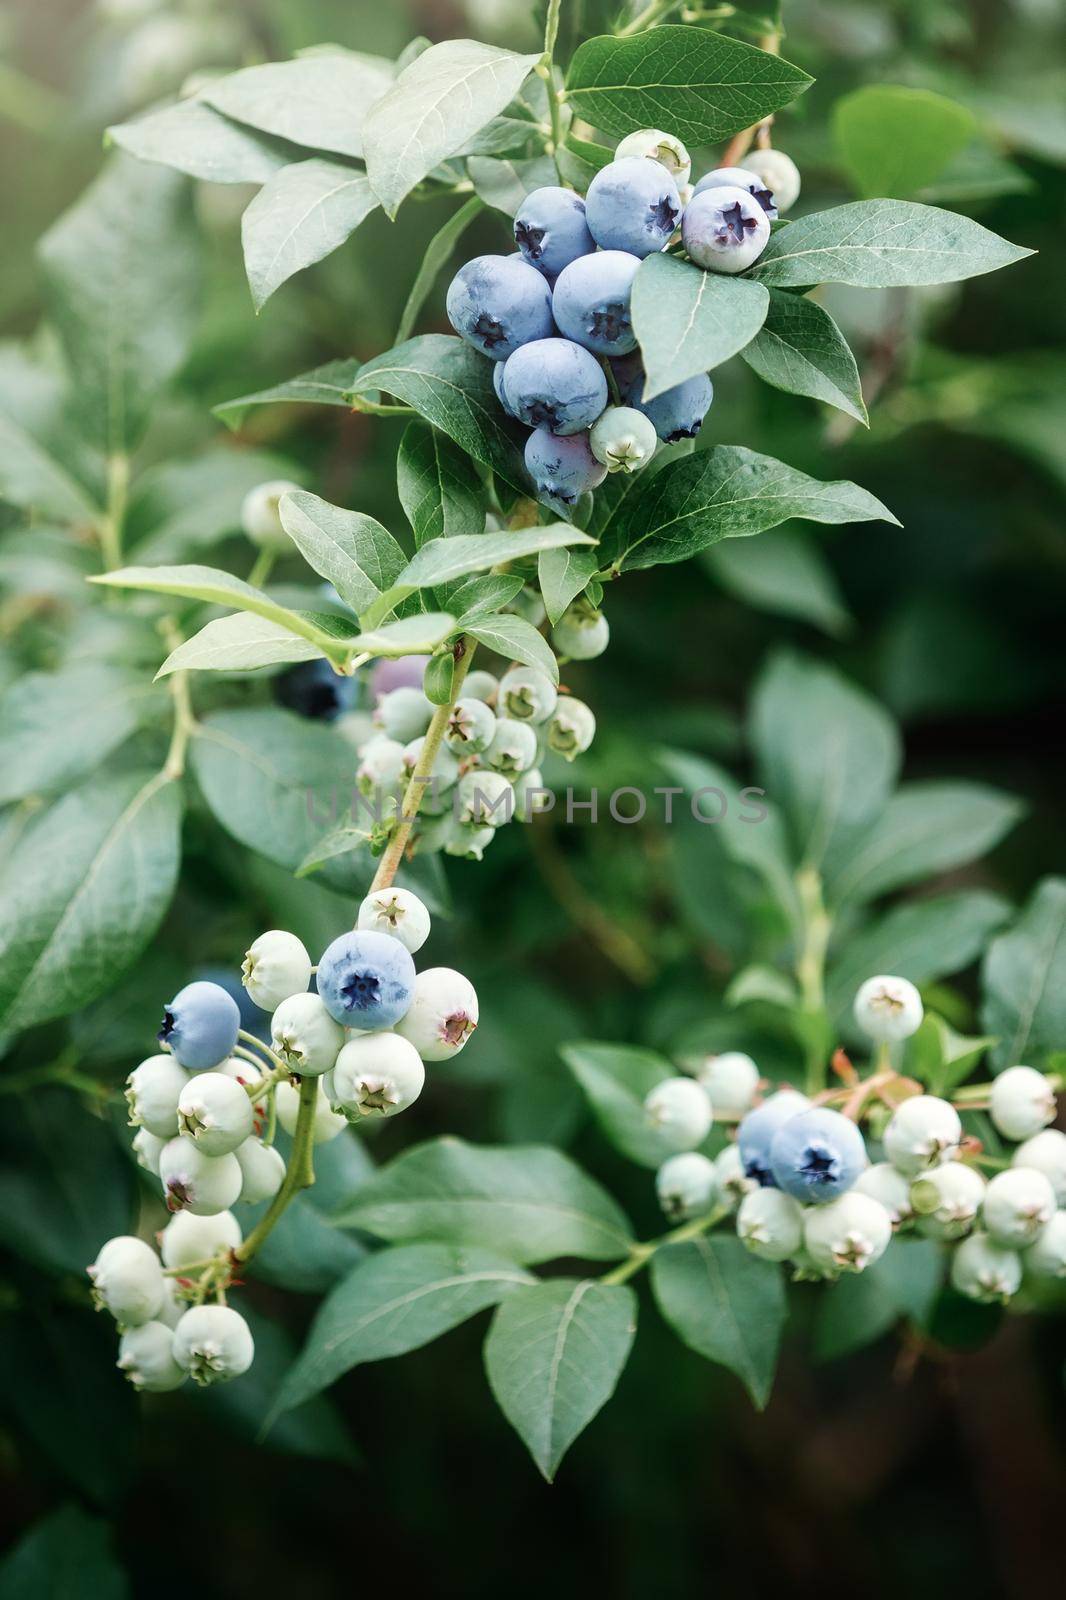 Fresh organic blueberries on blueberry bush, ready for picking.